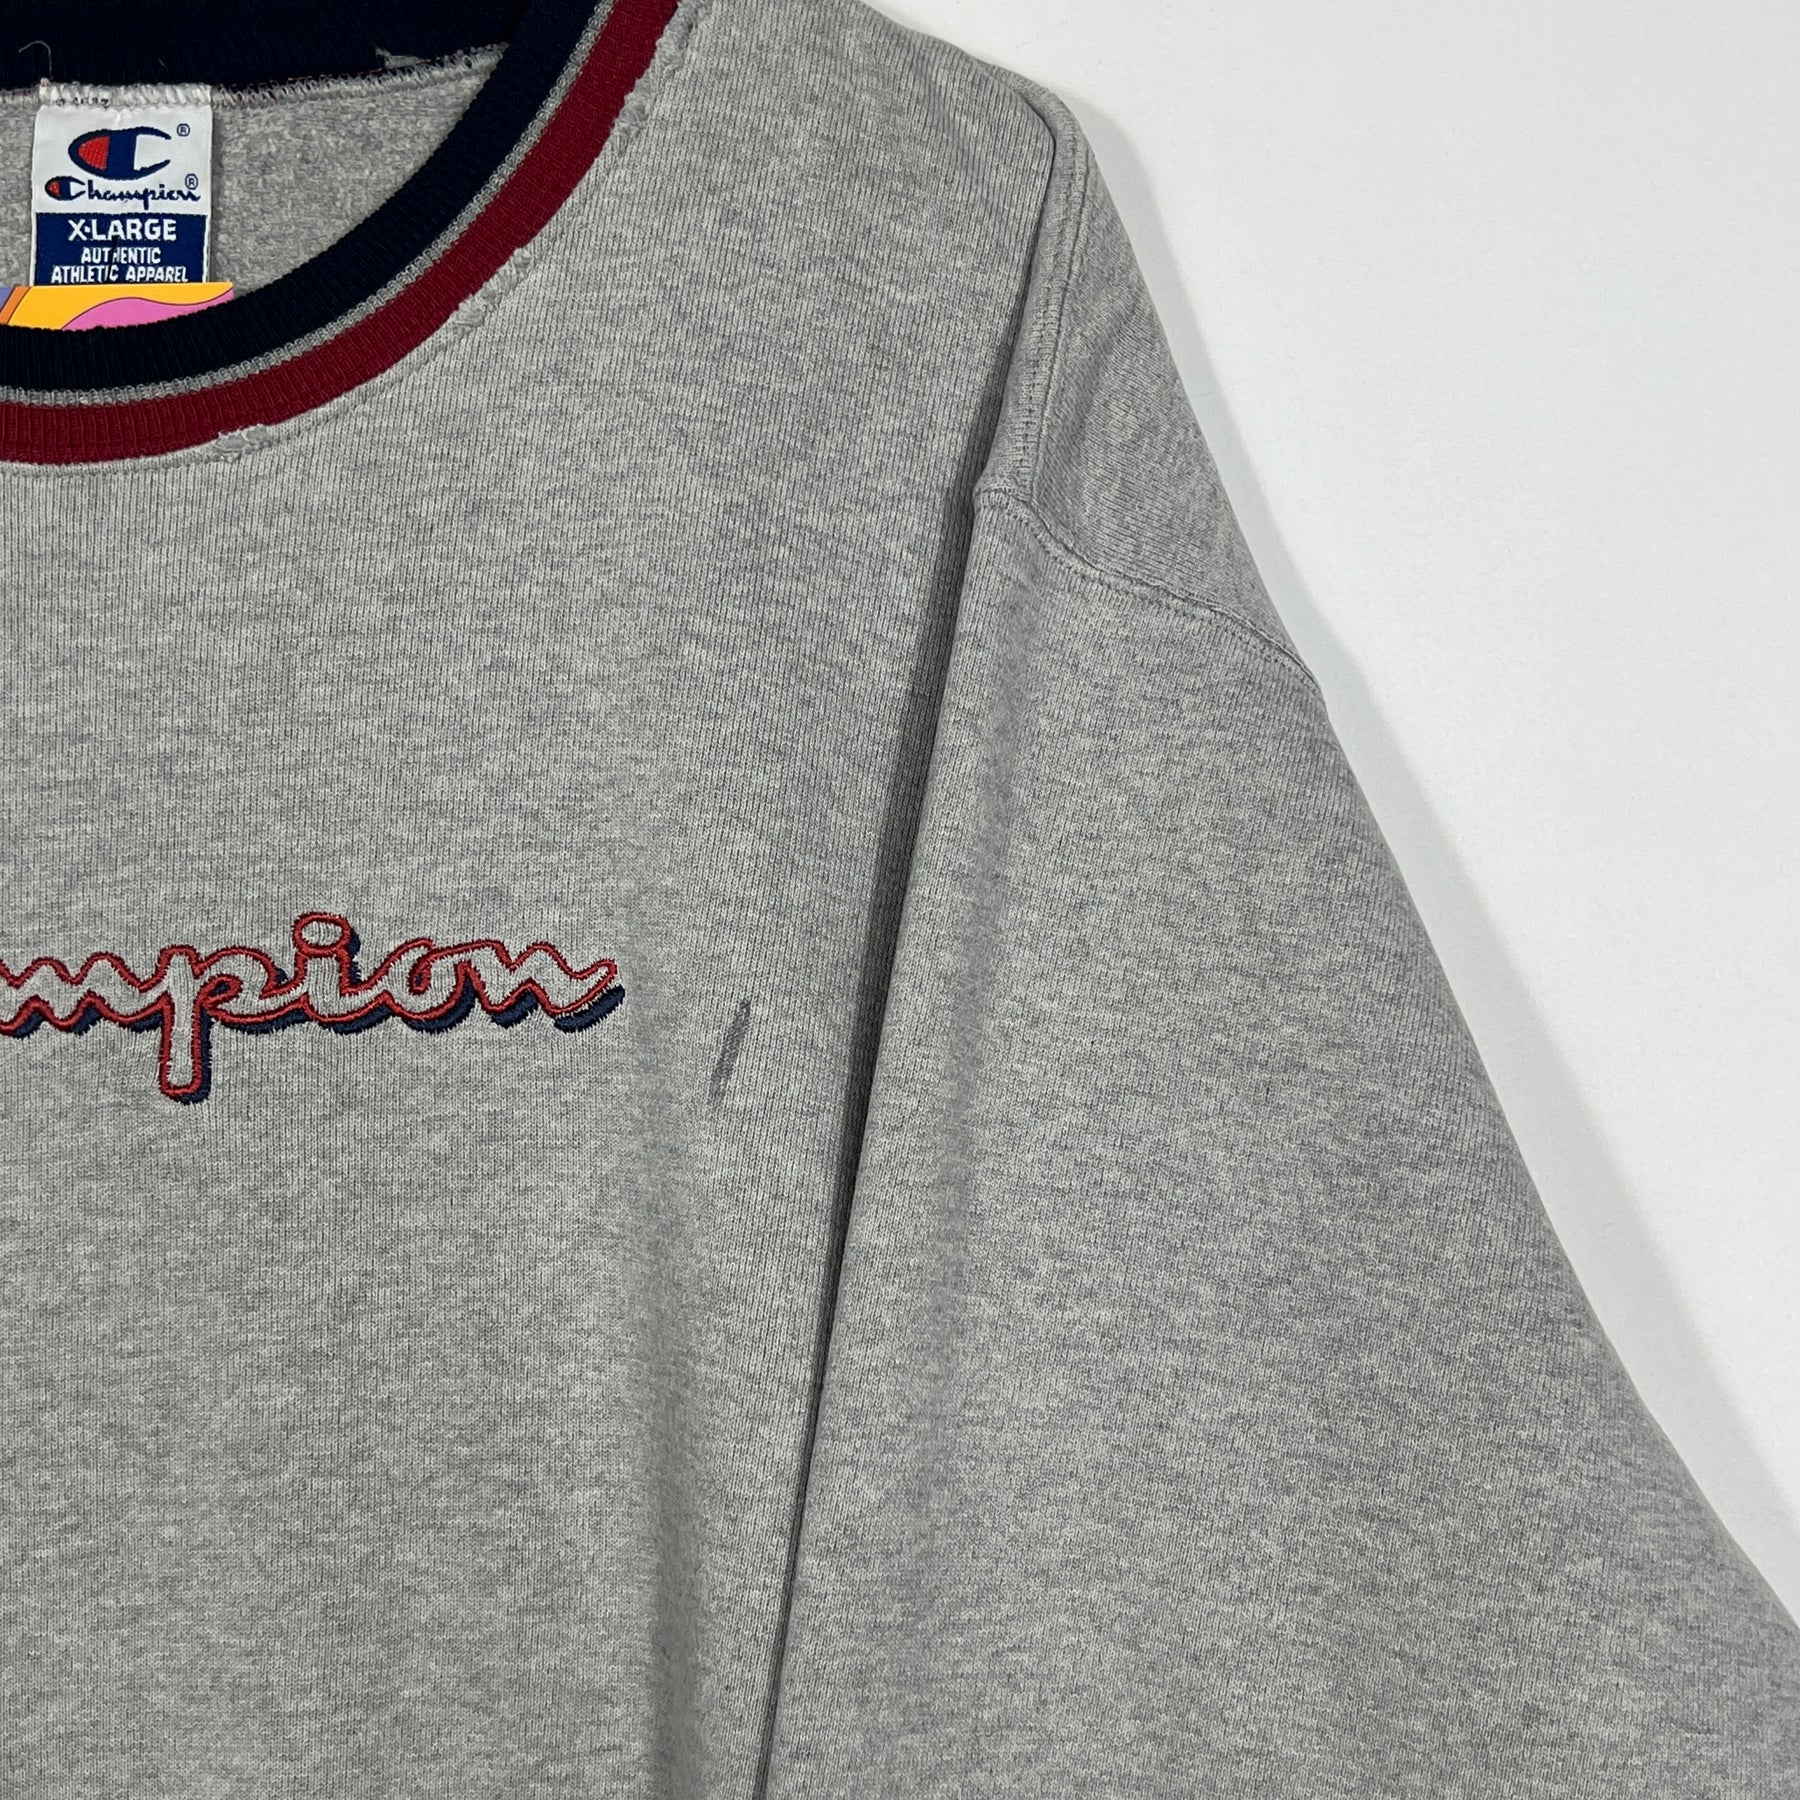 Vintage Champion Spell Out Sweatshirt - Men's XL